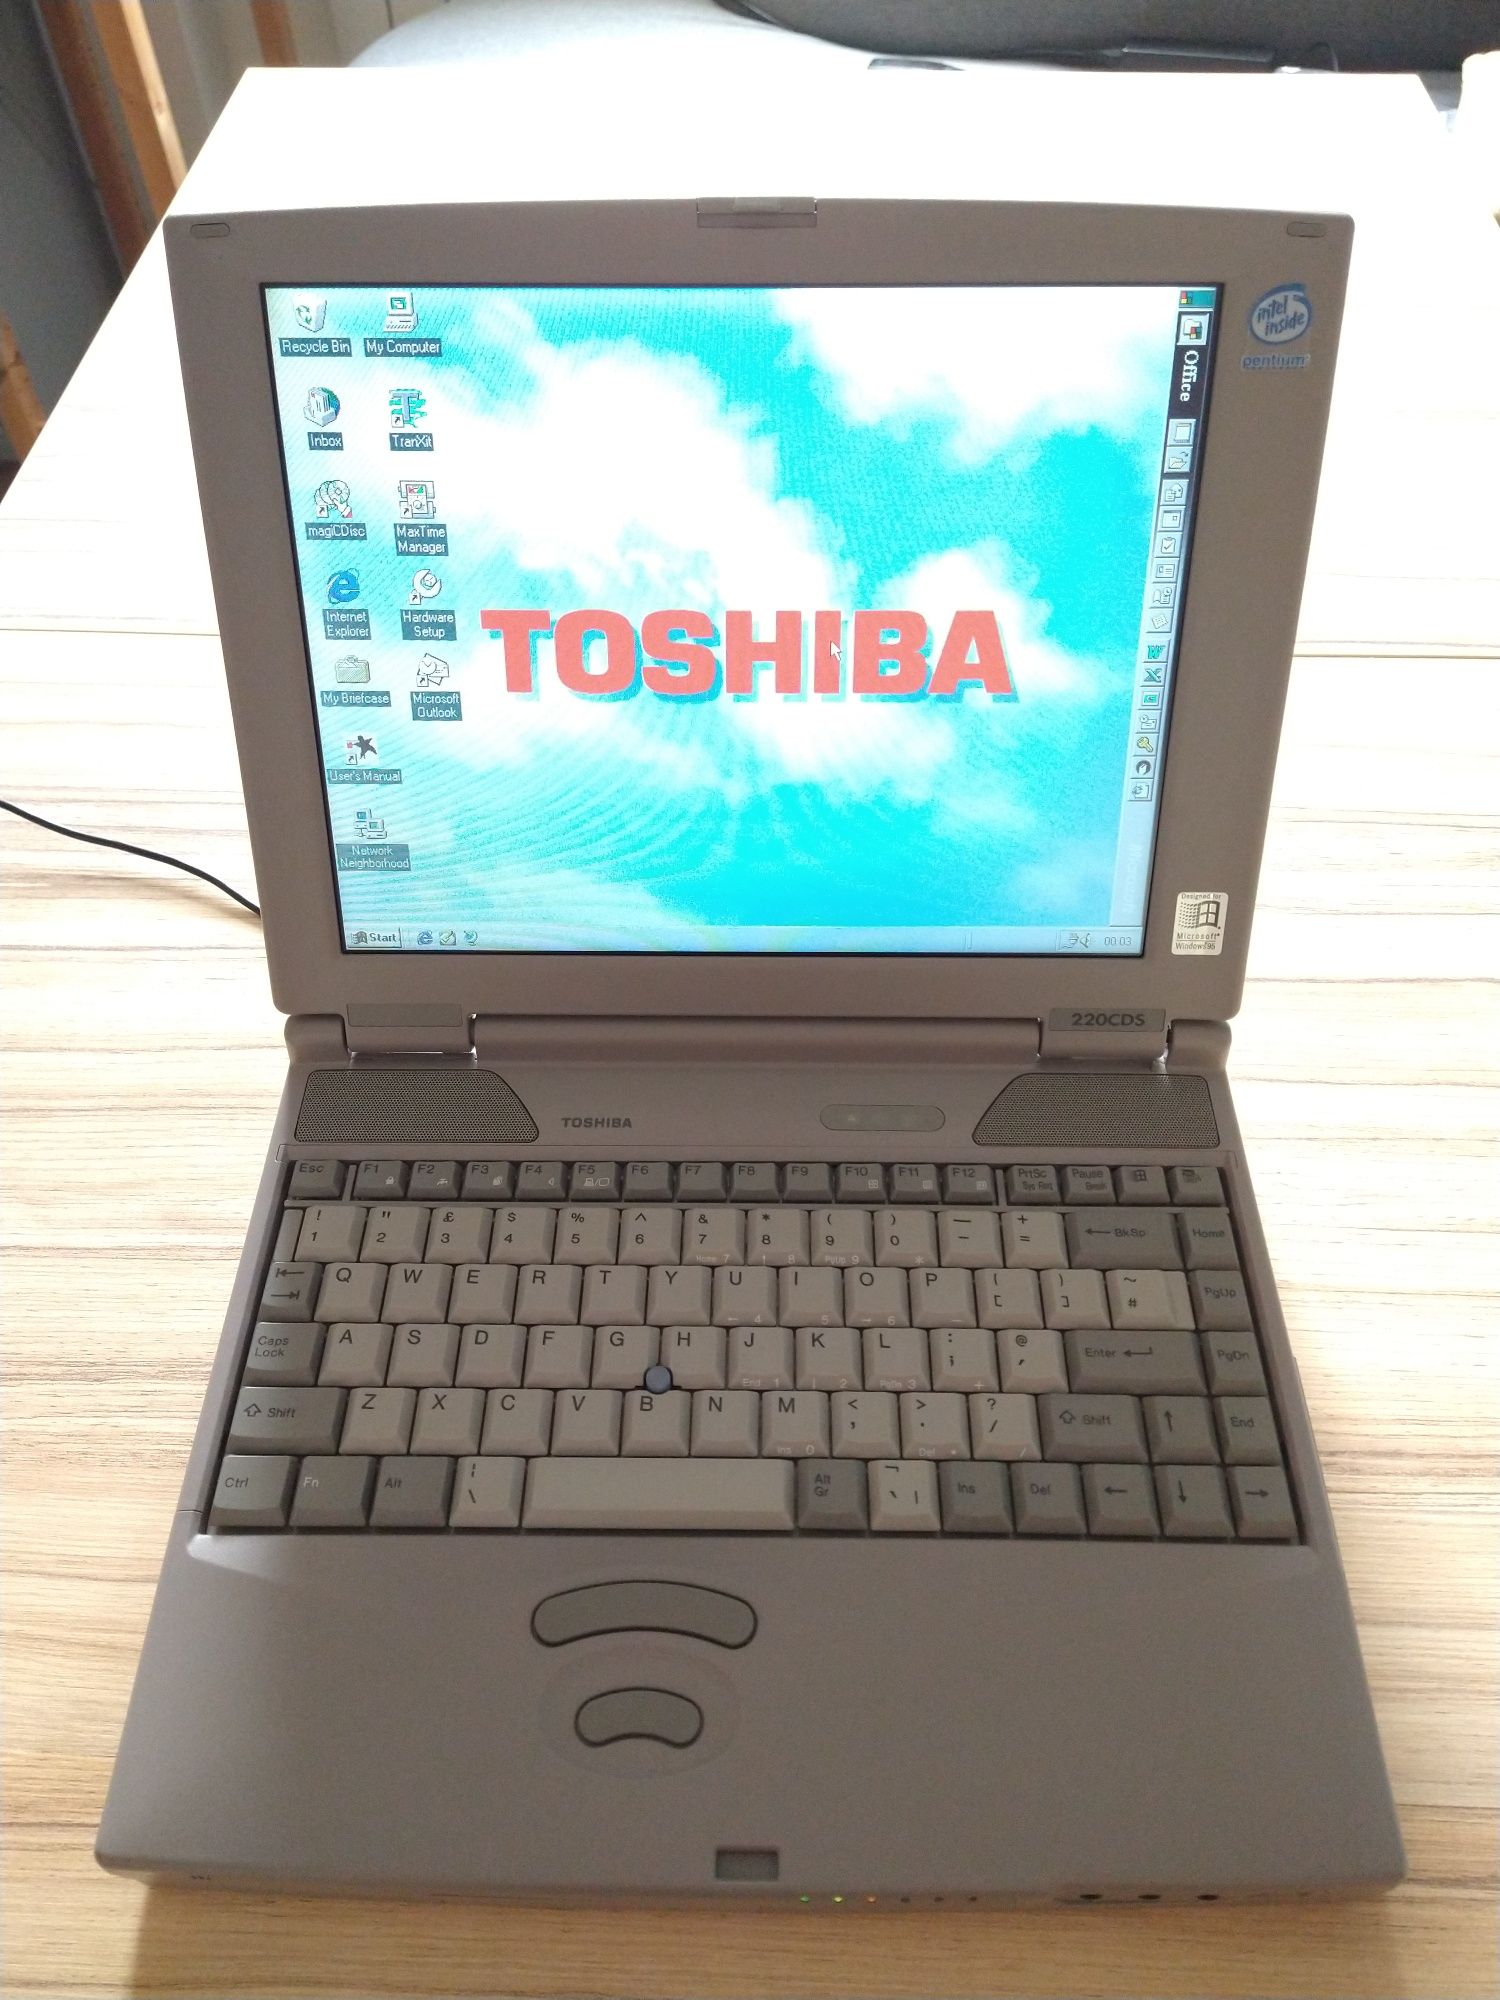 Laptop Toshiba satelite 220CDS zestaw  retro 1997